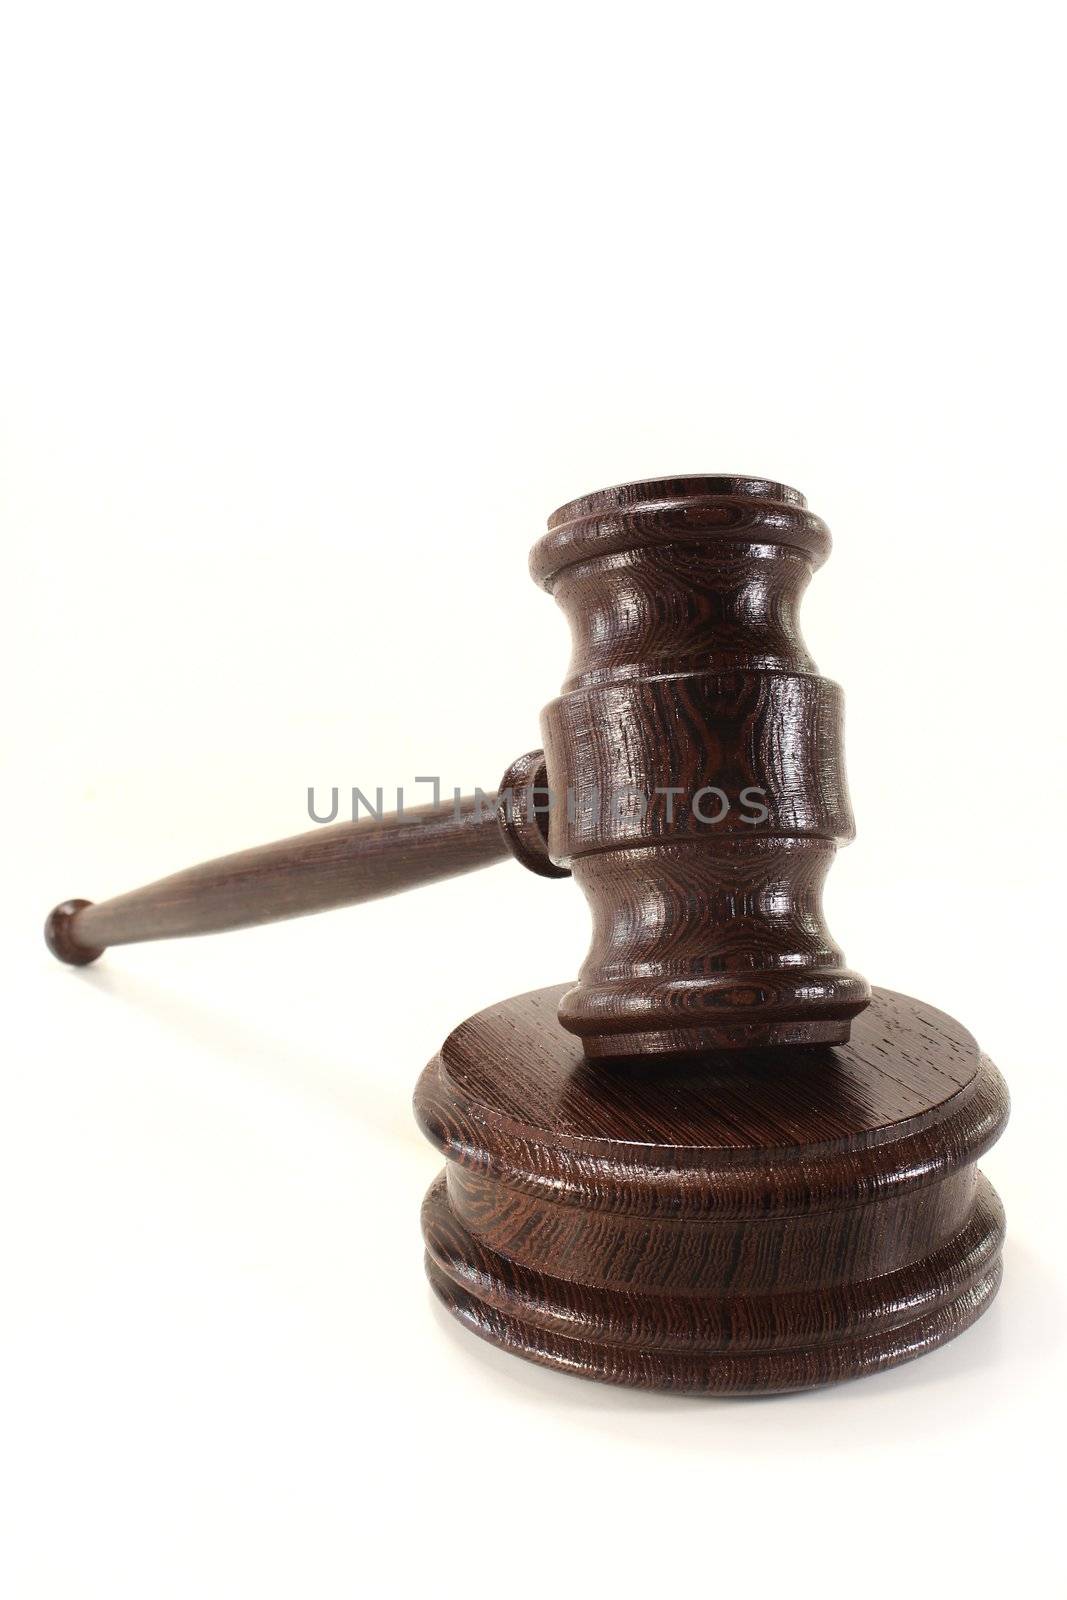 judge's gavel by silencefoto